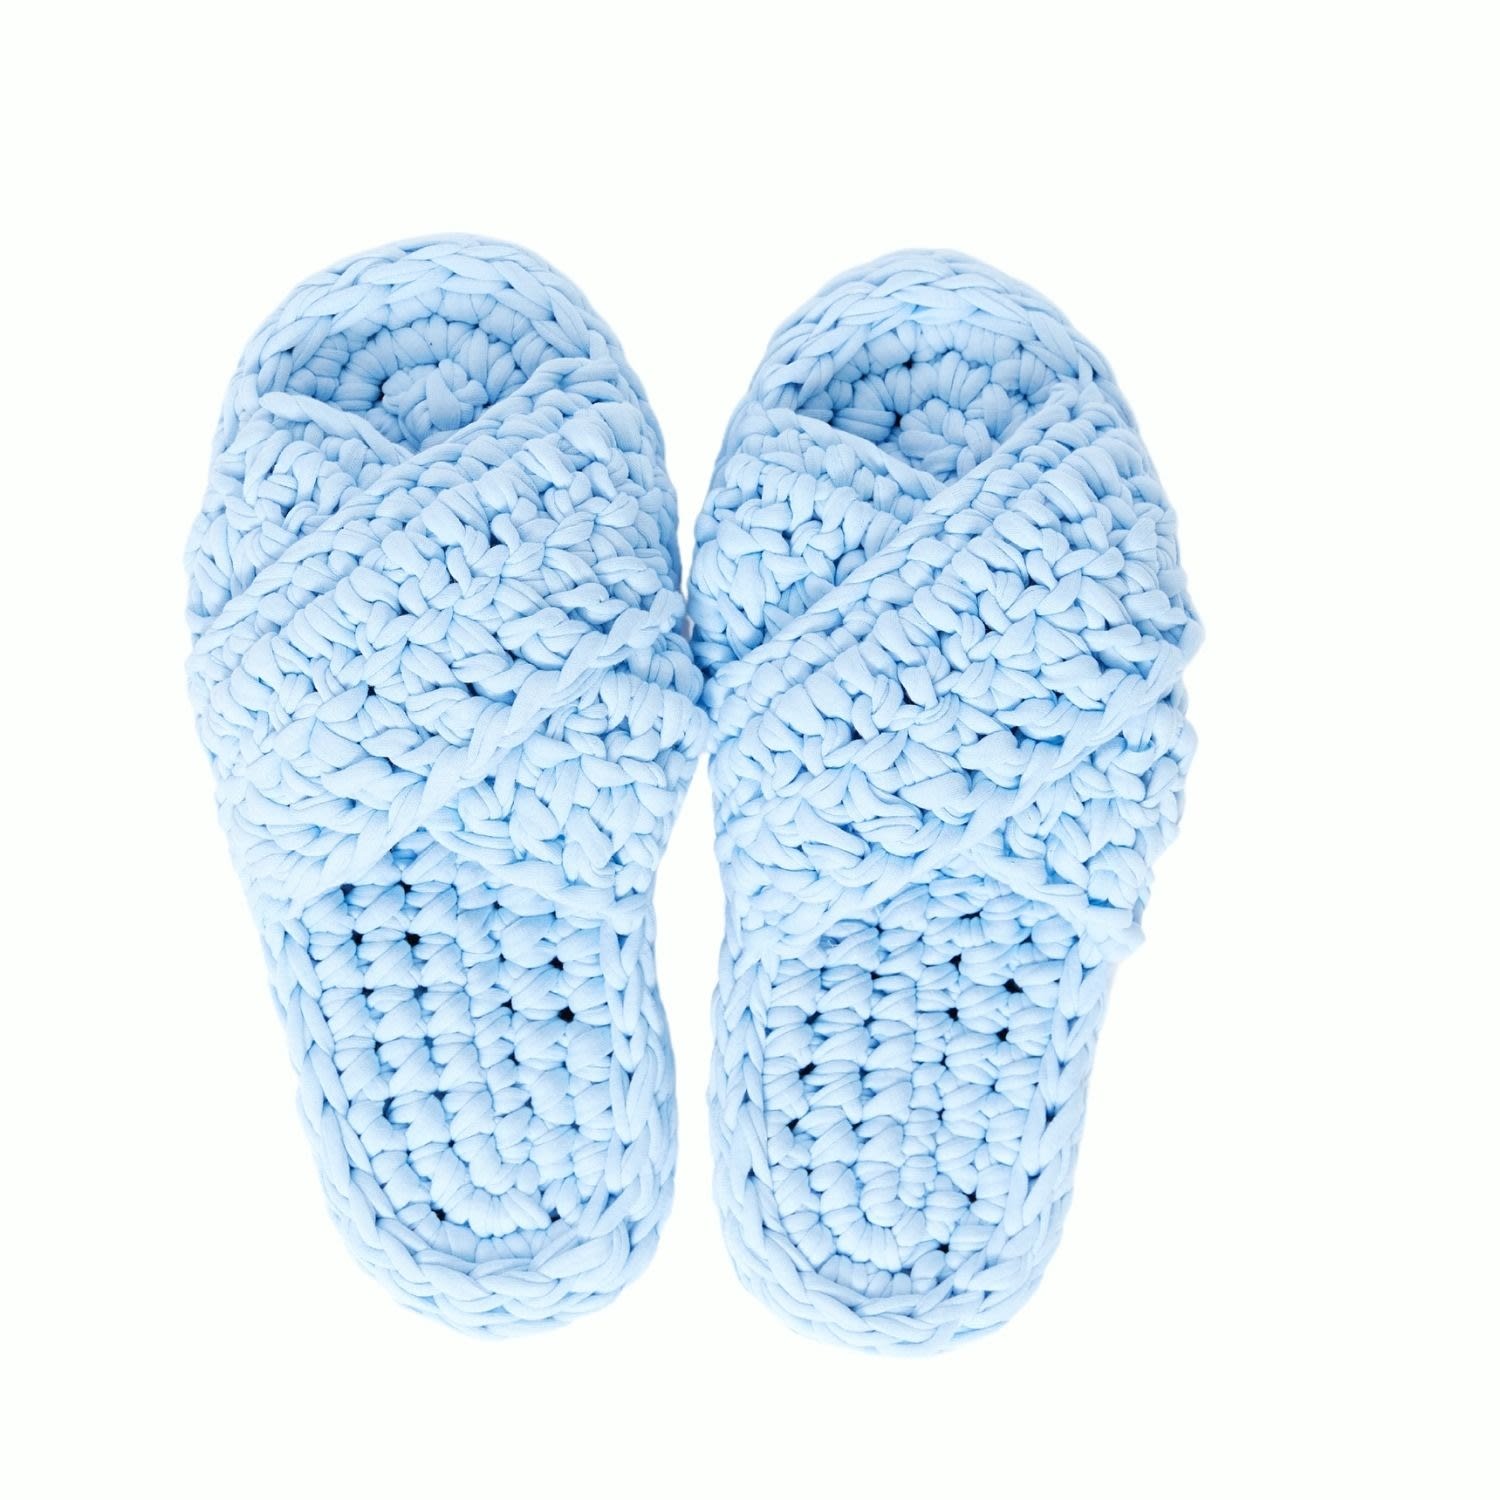 N'onat Women's Handmade Crochet Slippers In Blue